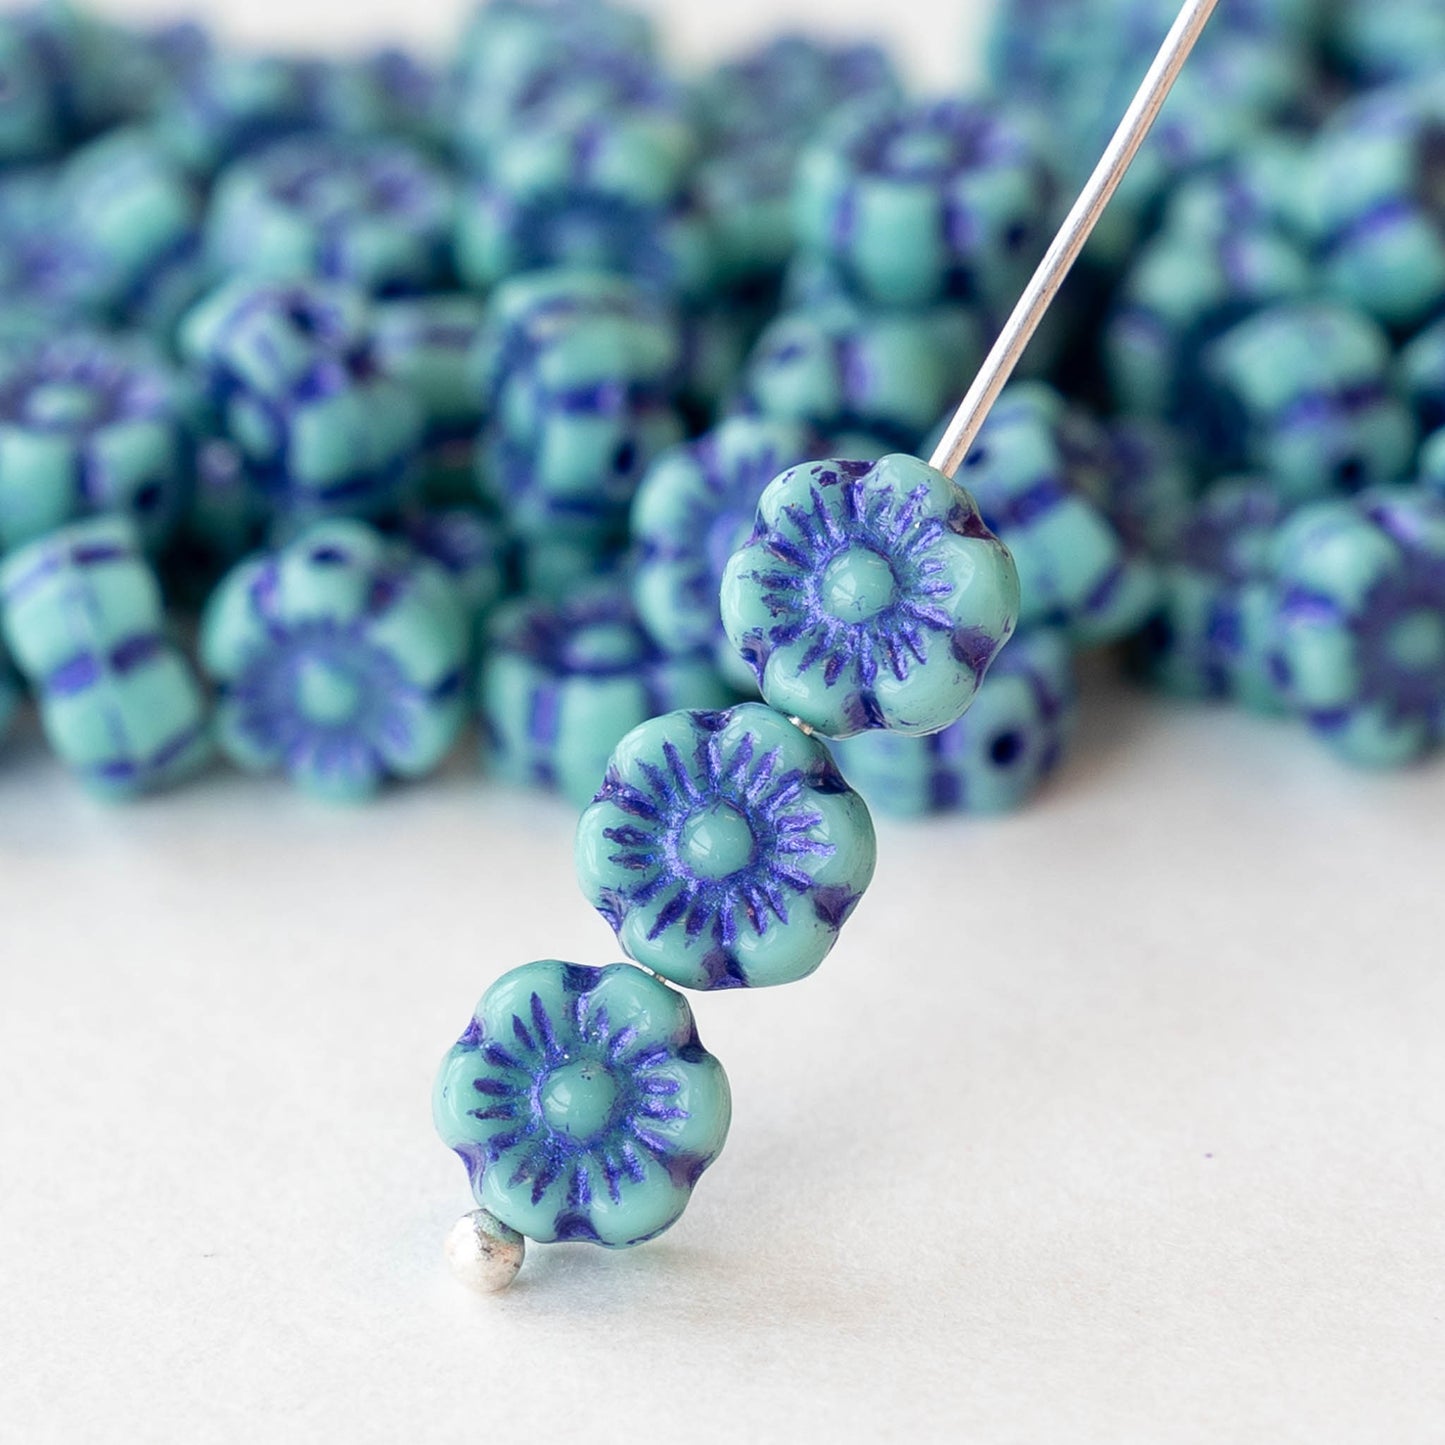 6mm Glass Flower Beads - Aqua with Purple Wash - 30 beads